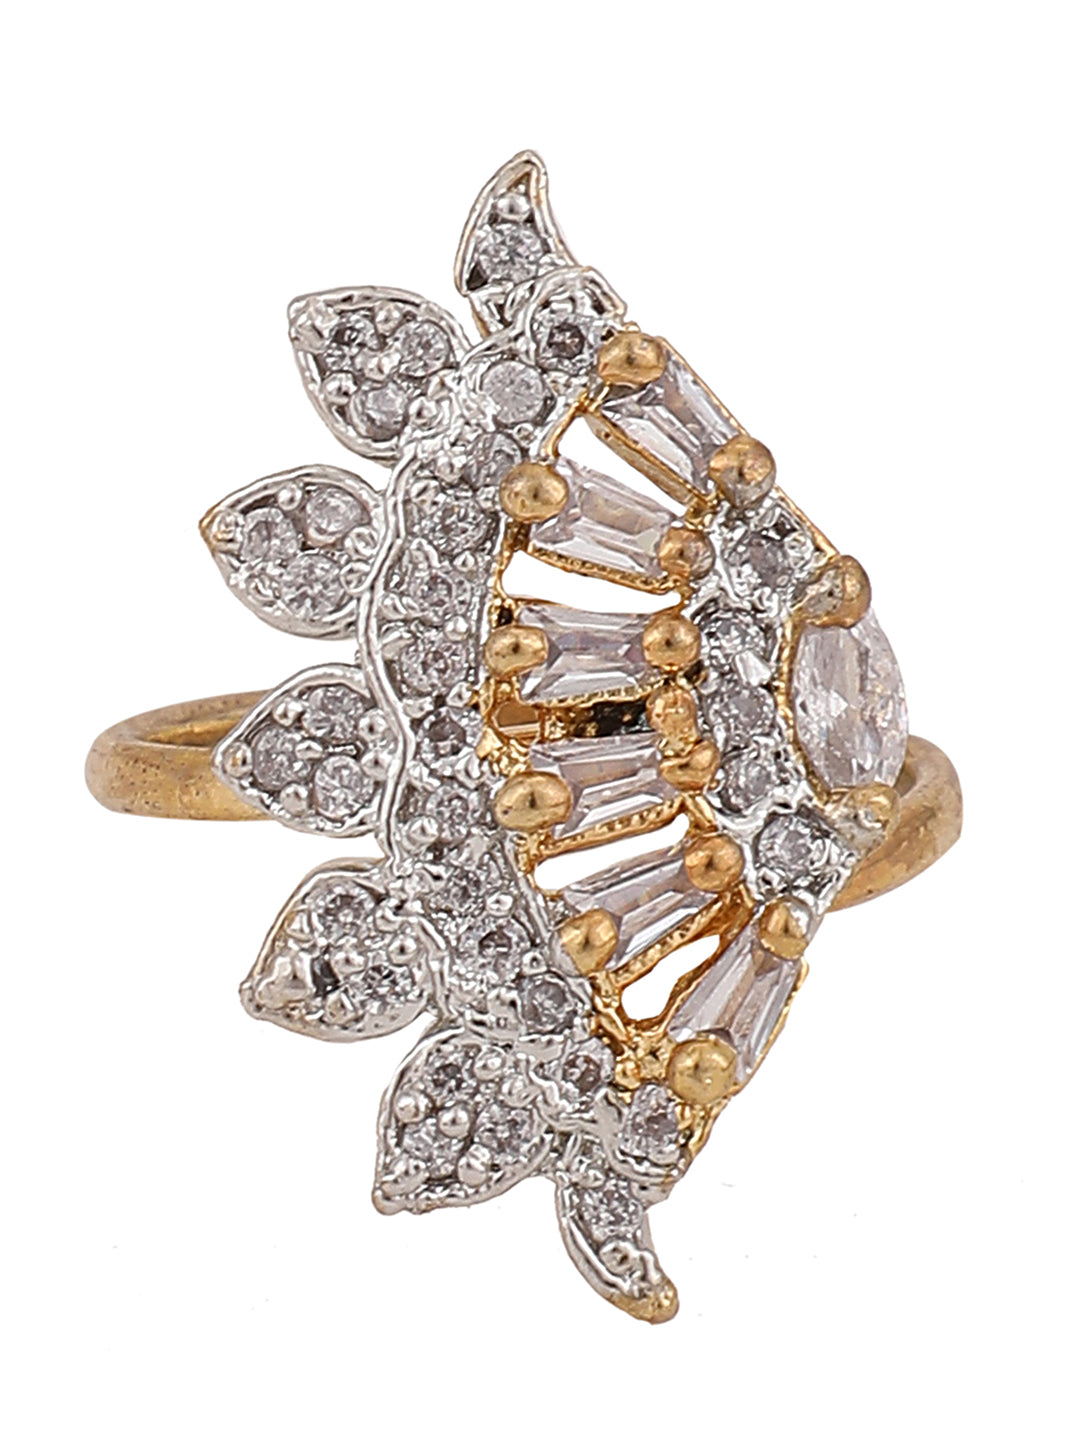 Women's Stylish Cocktail White American Diamond Adjustable Ring  - Anikas Creation